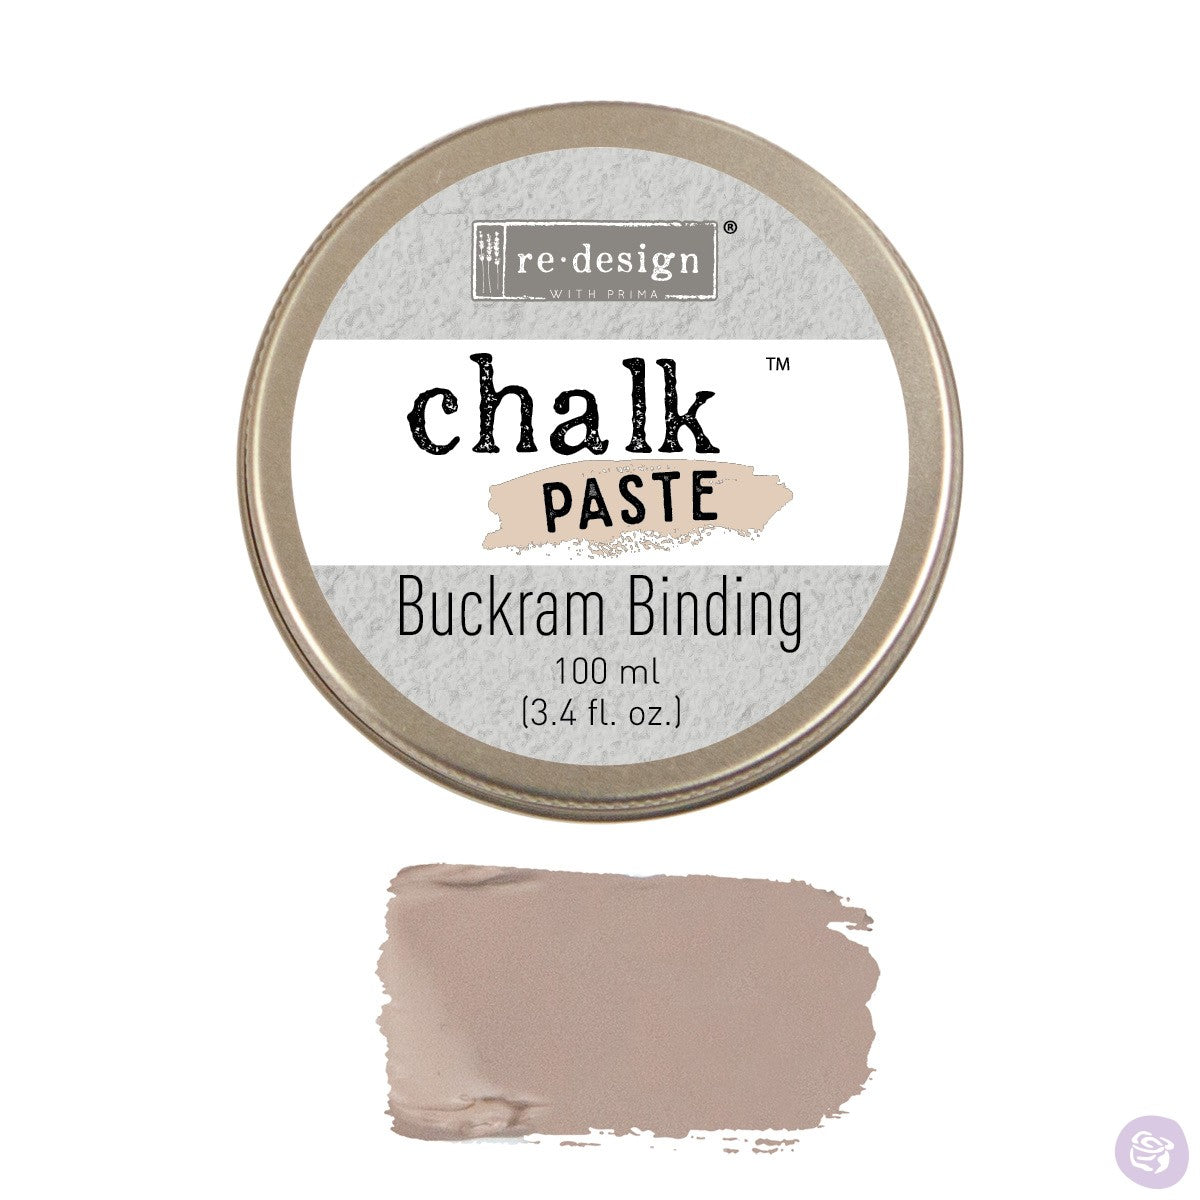 Chalk Paste-Backram Binding